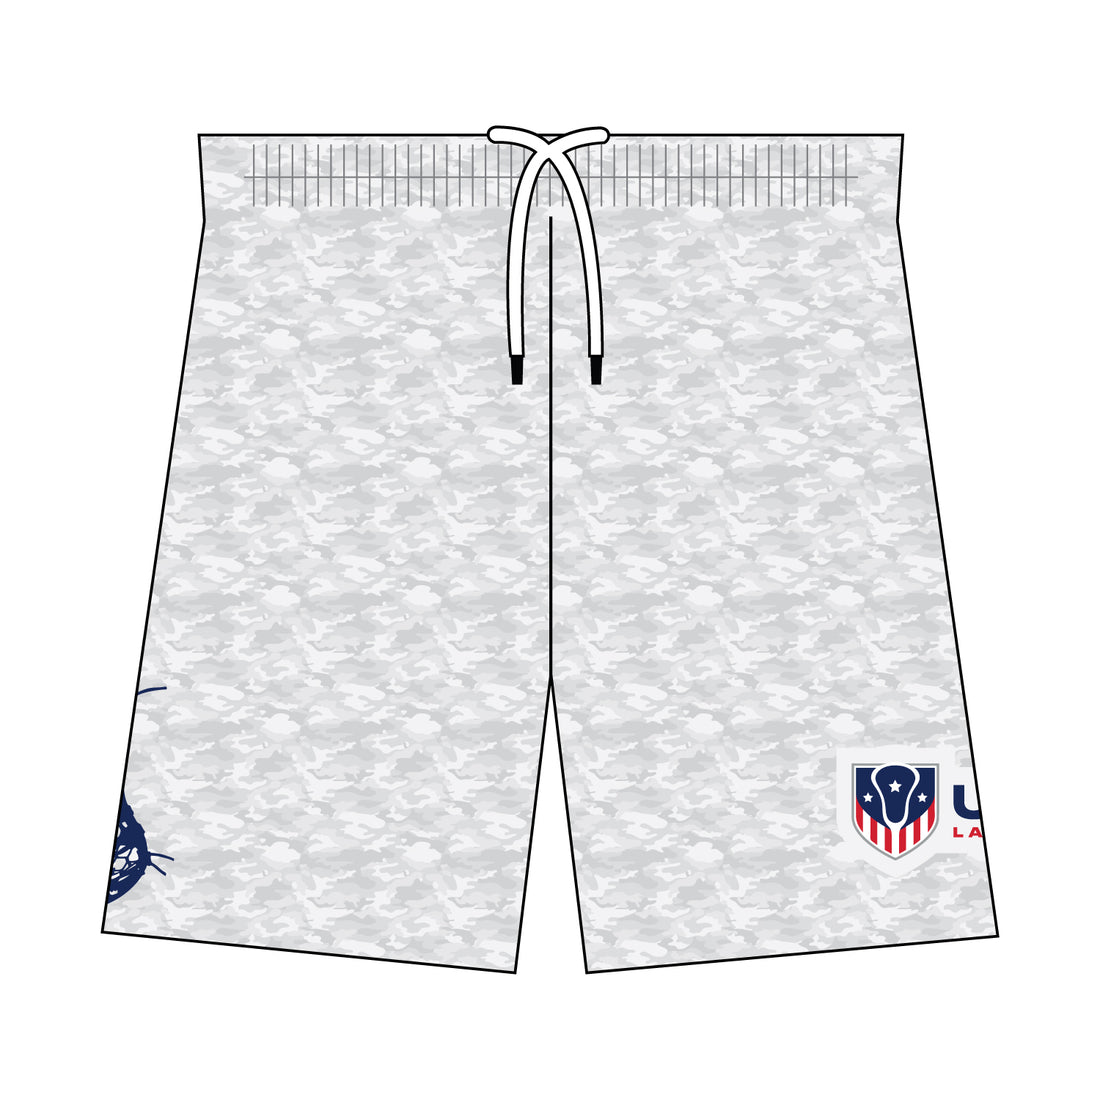 Adult USA Lacrosse Grey Camo Shorts